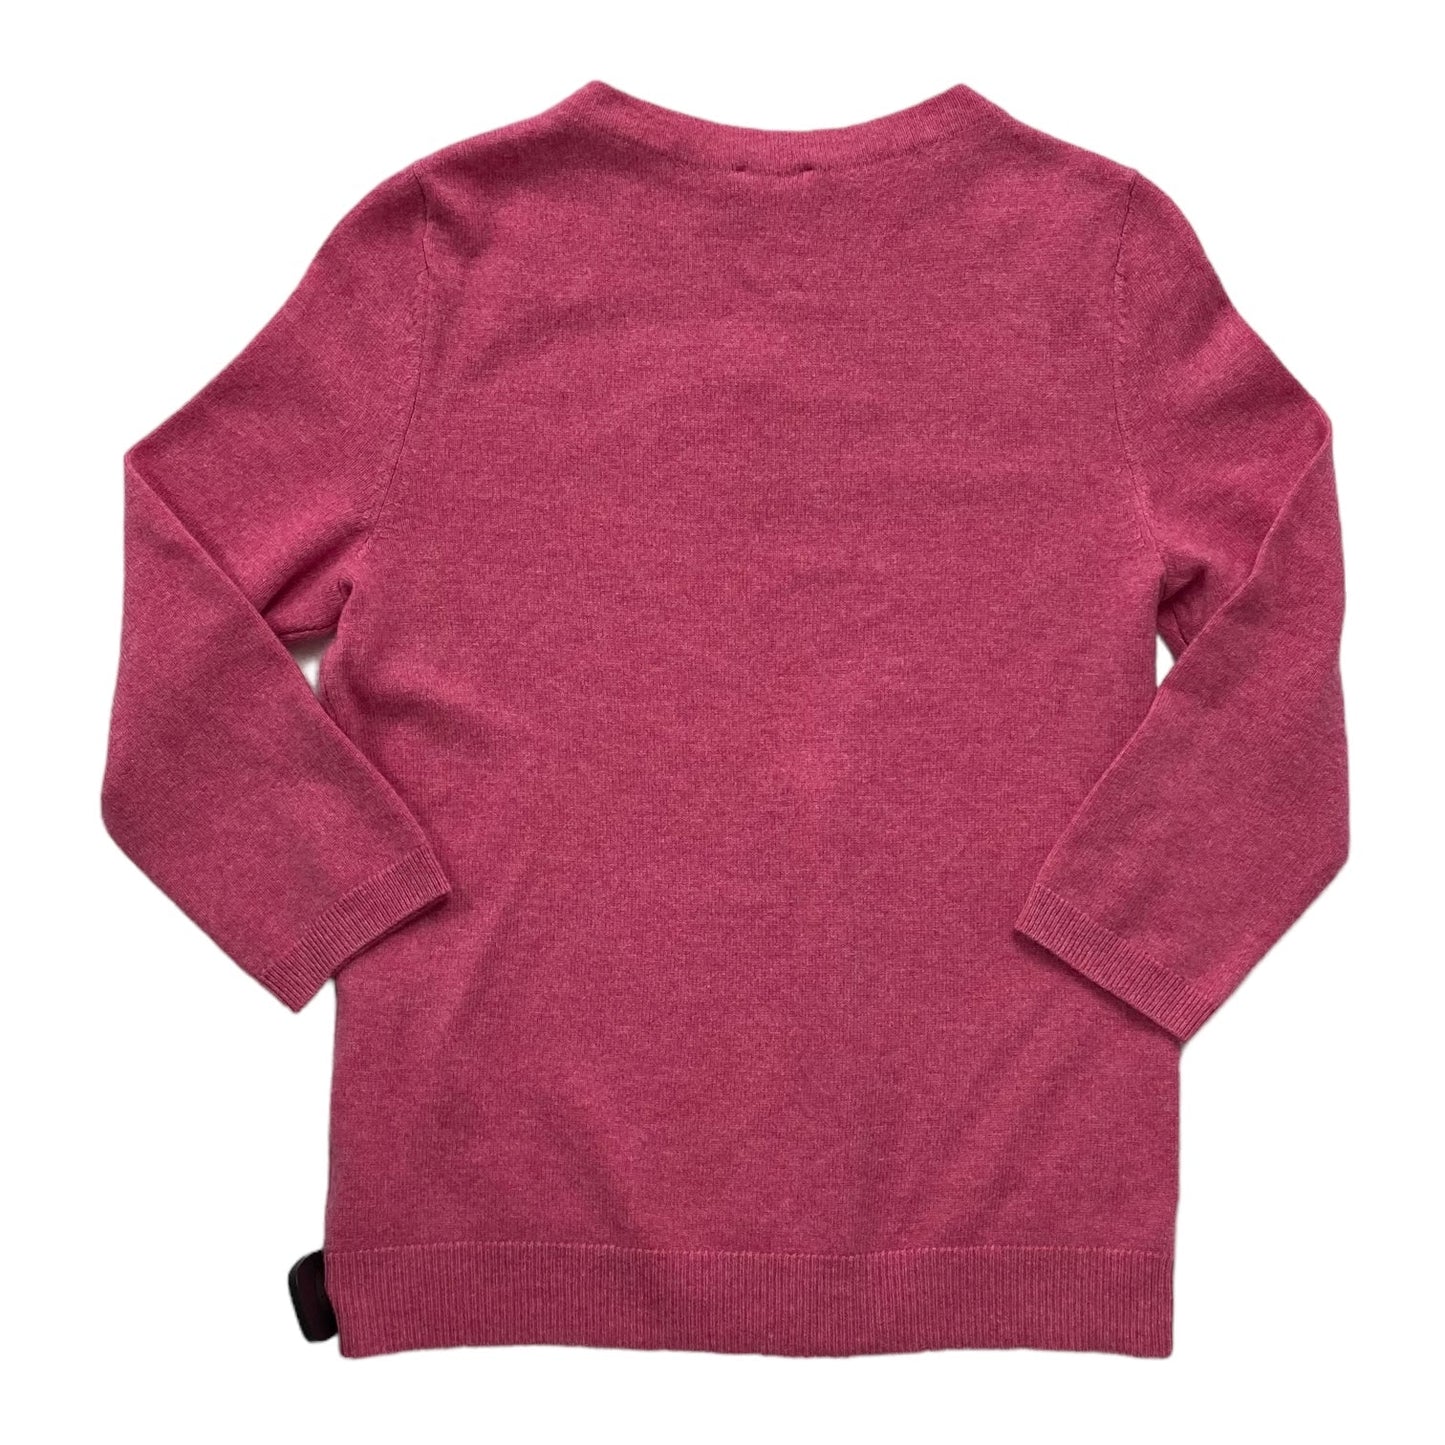 Pink Sweater Cashmere Talbots, Size M